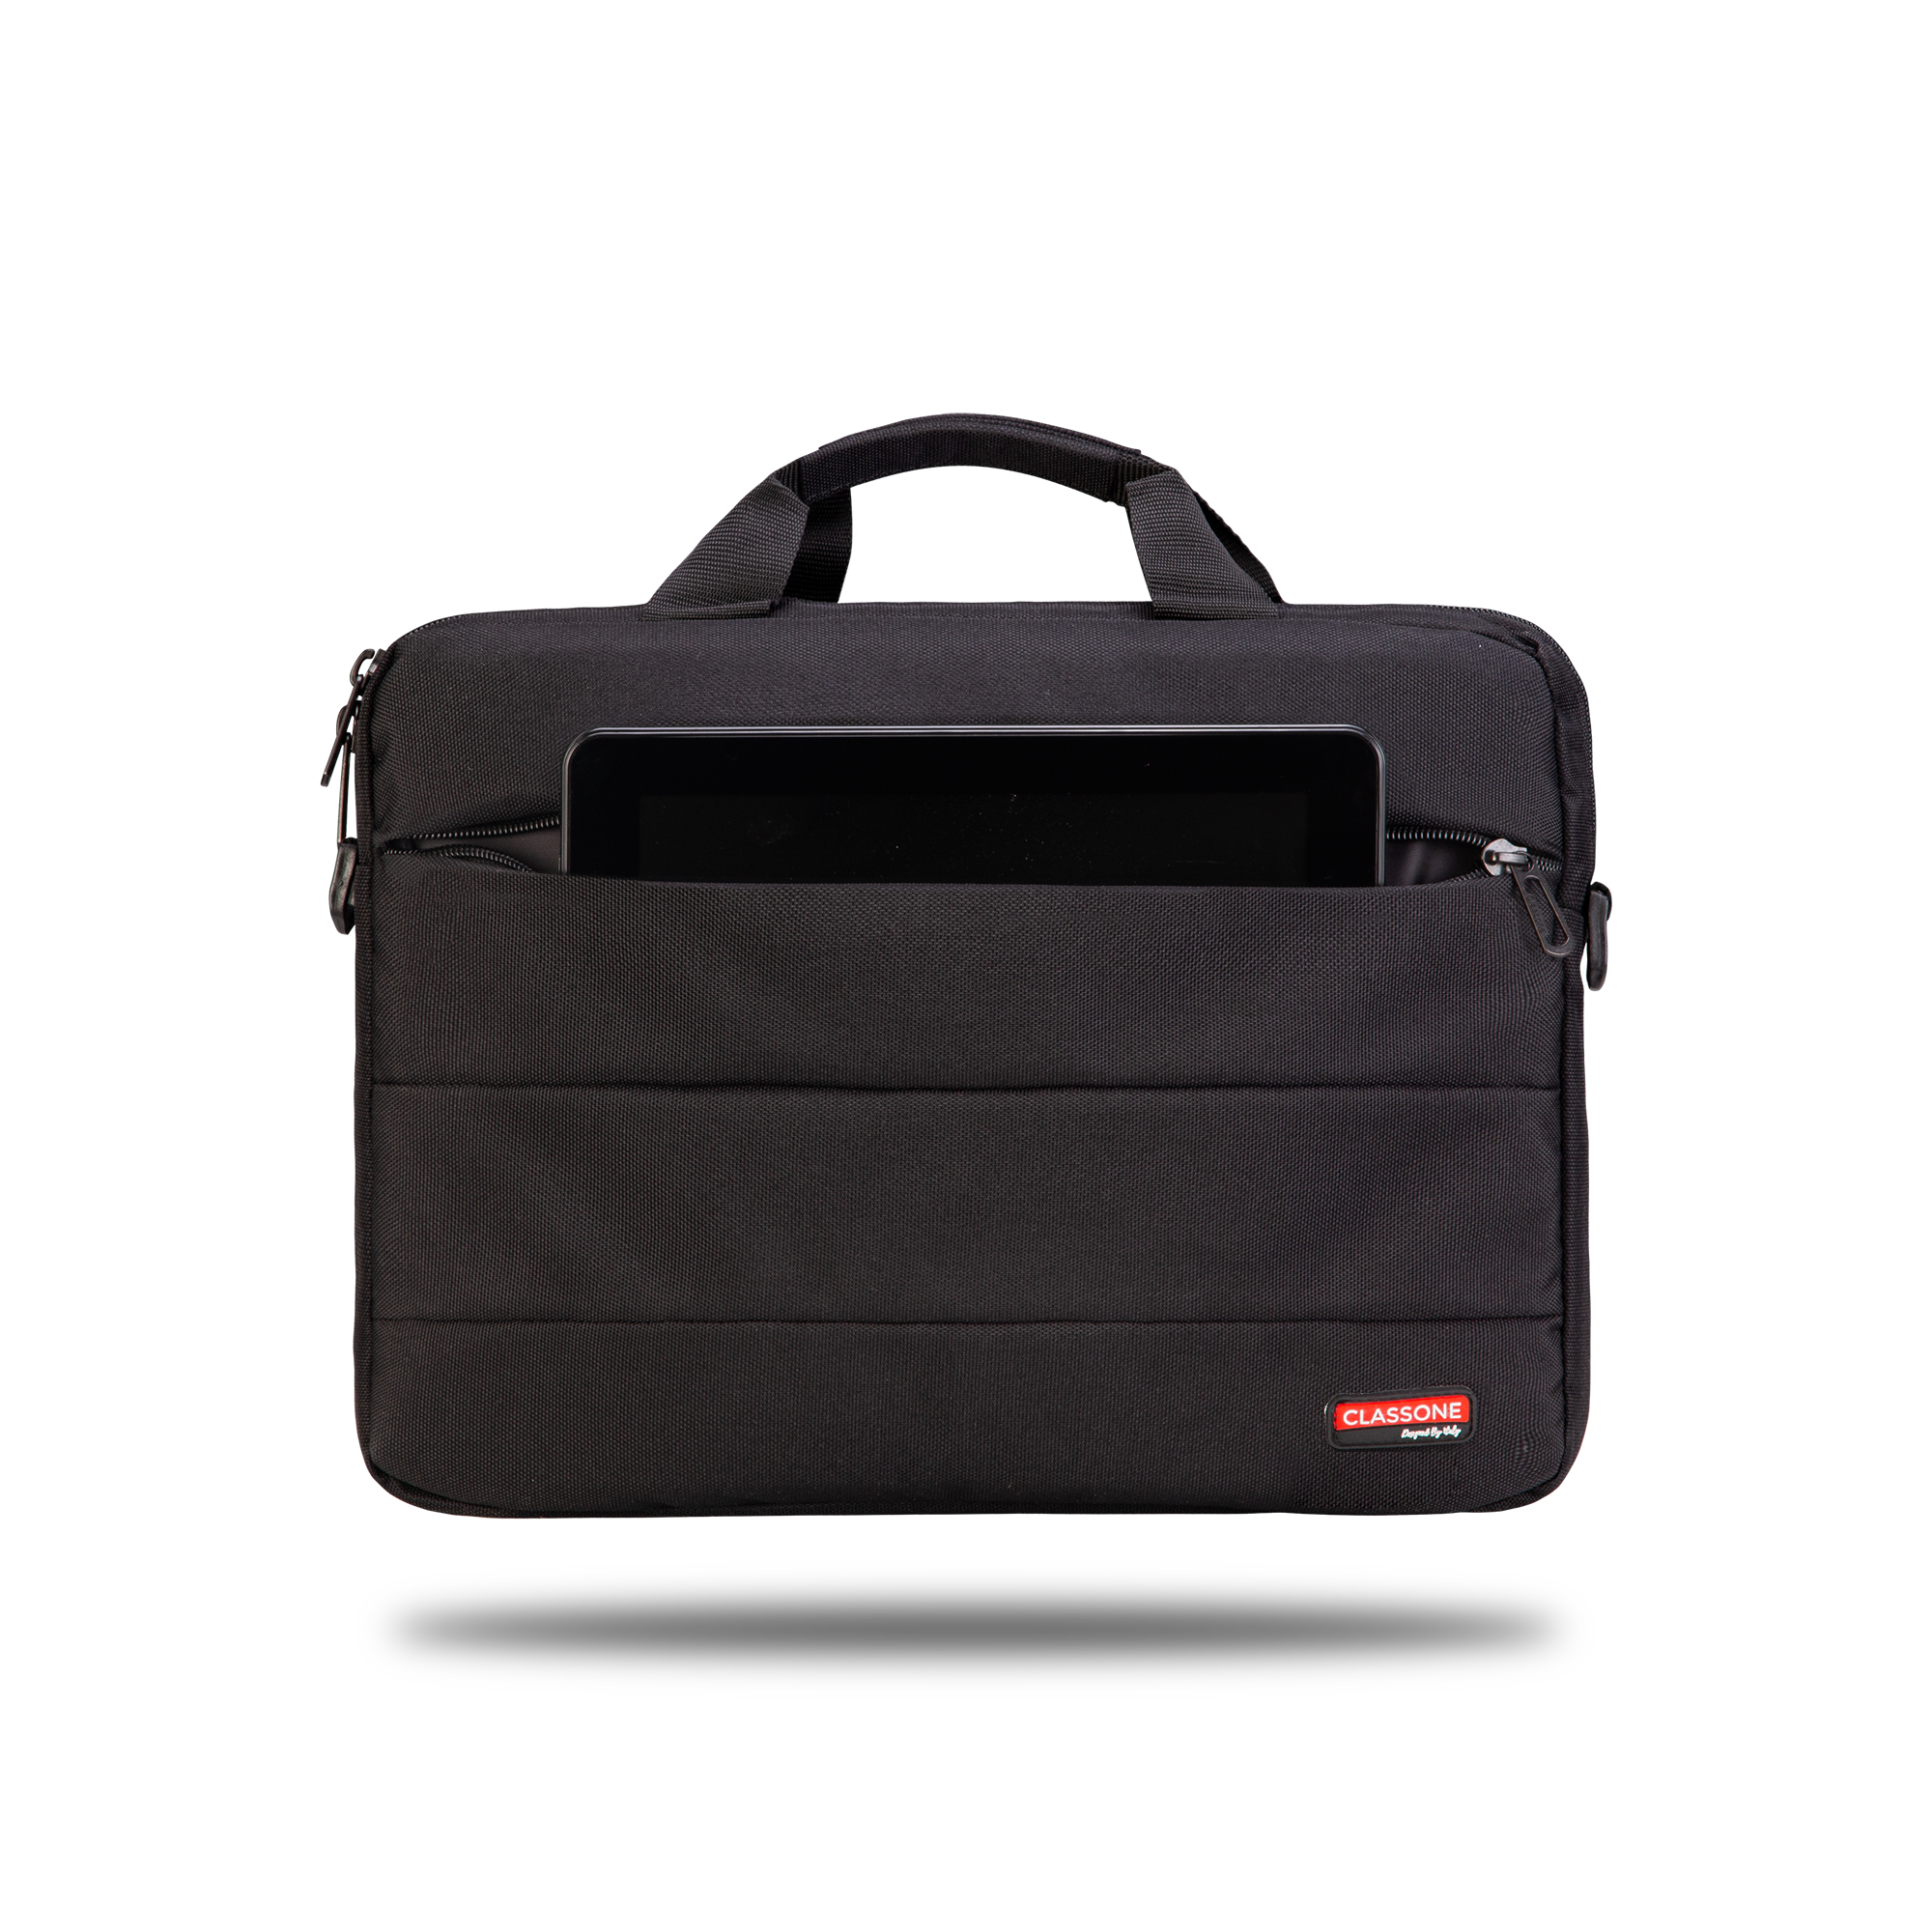 Classone Romeo Medium Serisi TL2400 13-14 inch uyumlu Laptop Çantası-Siyah